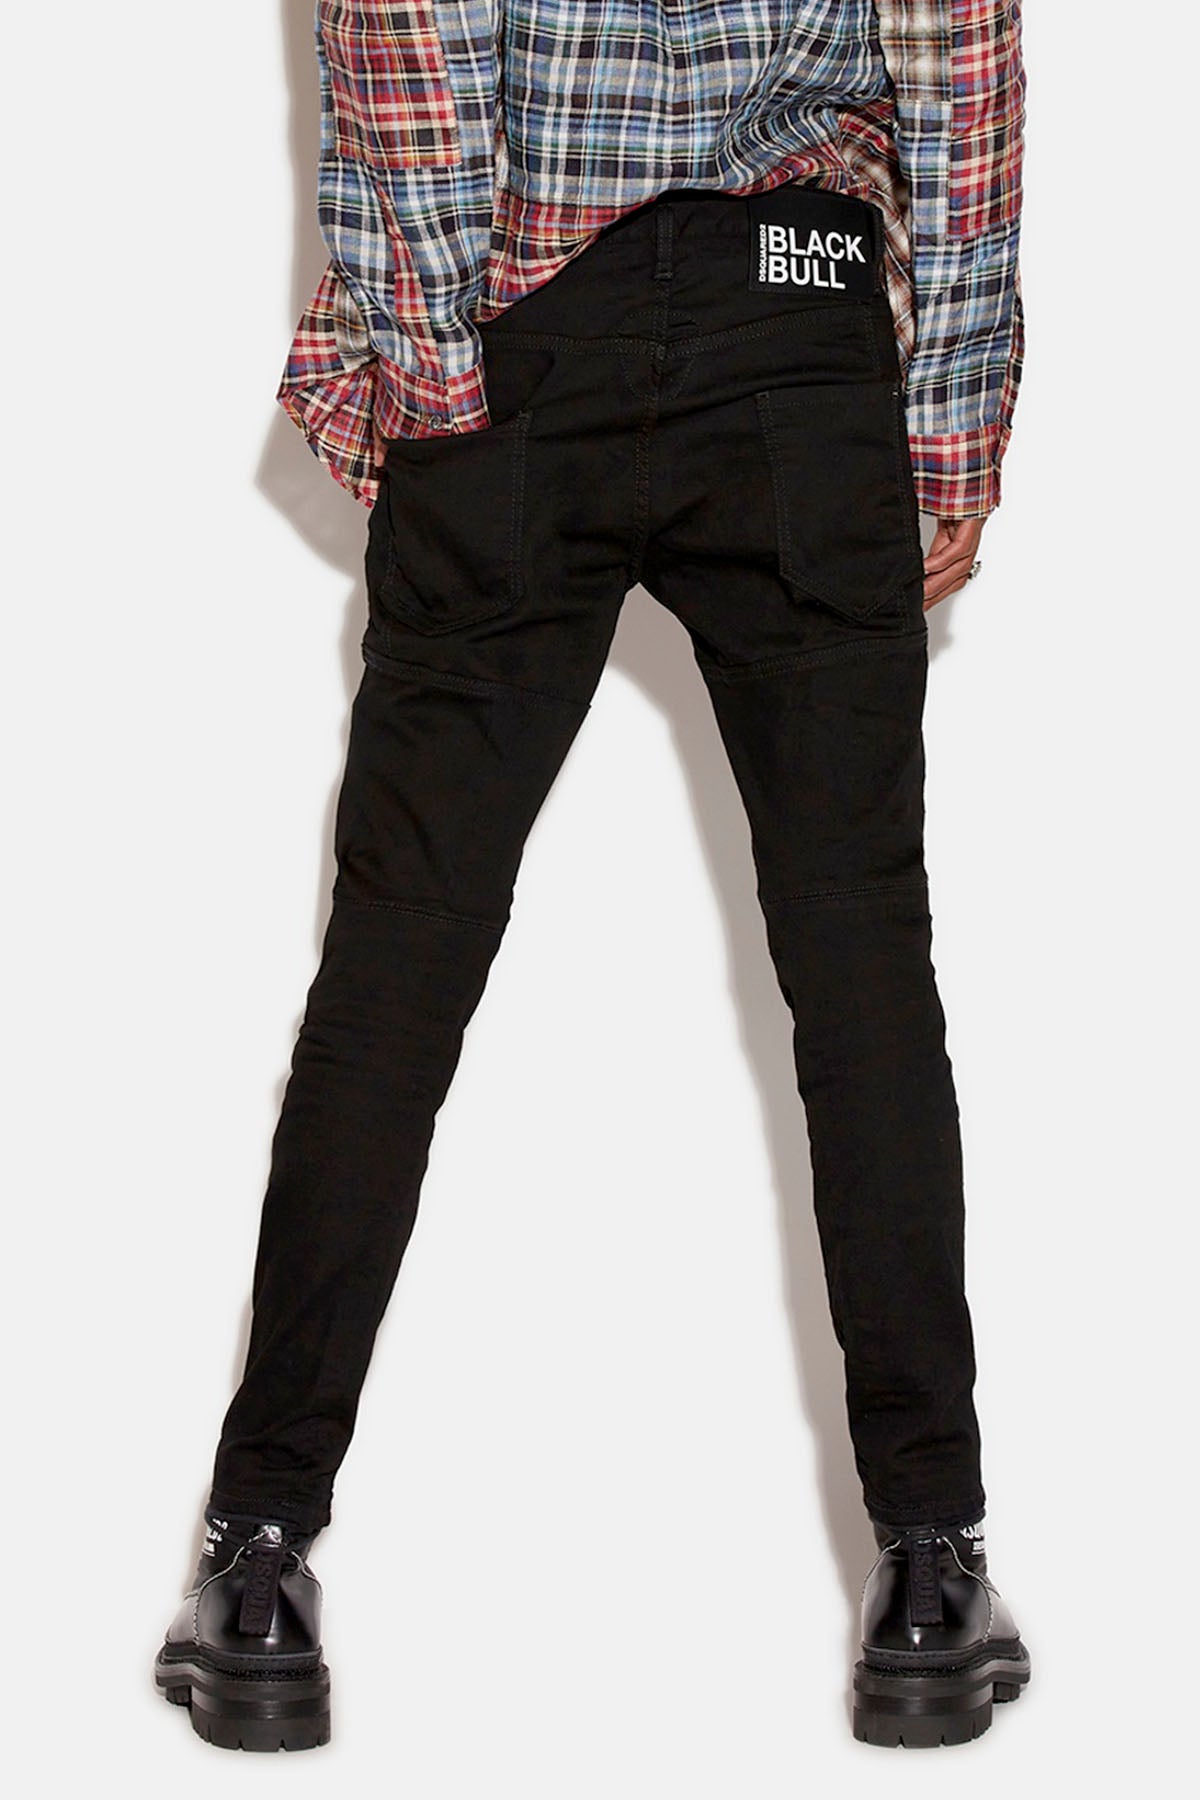 Dsquared Skater Black Bull Jeans-Libas Trendy Fashion Store